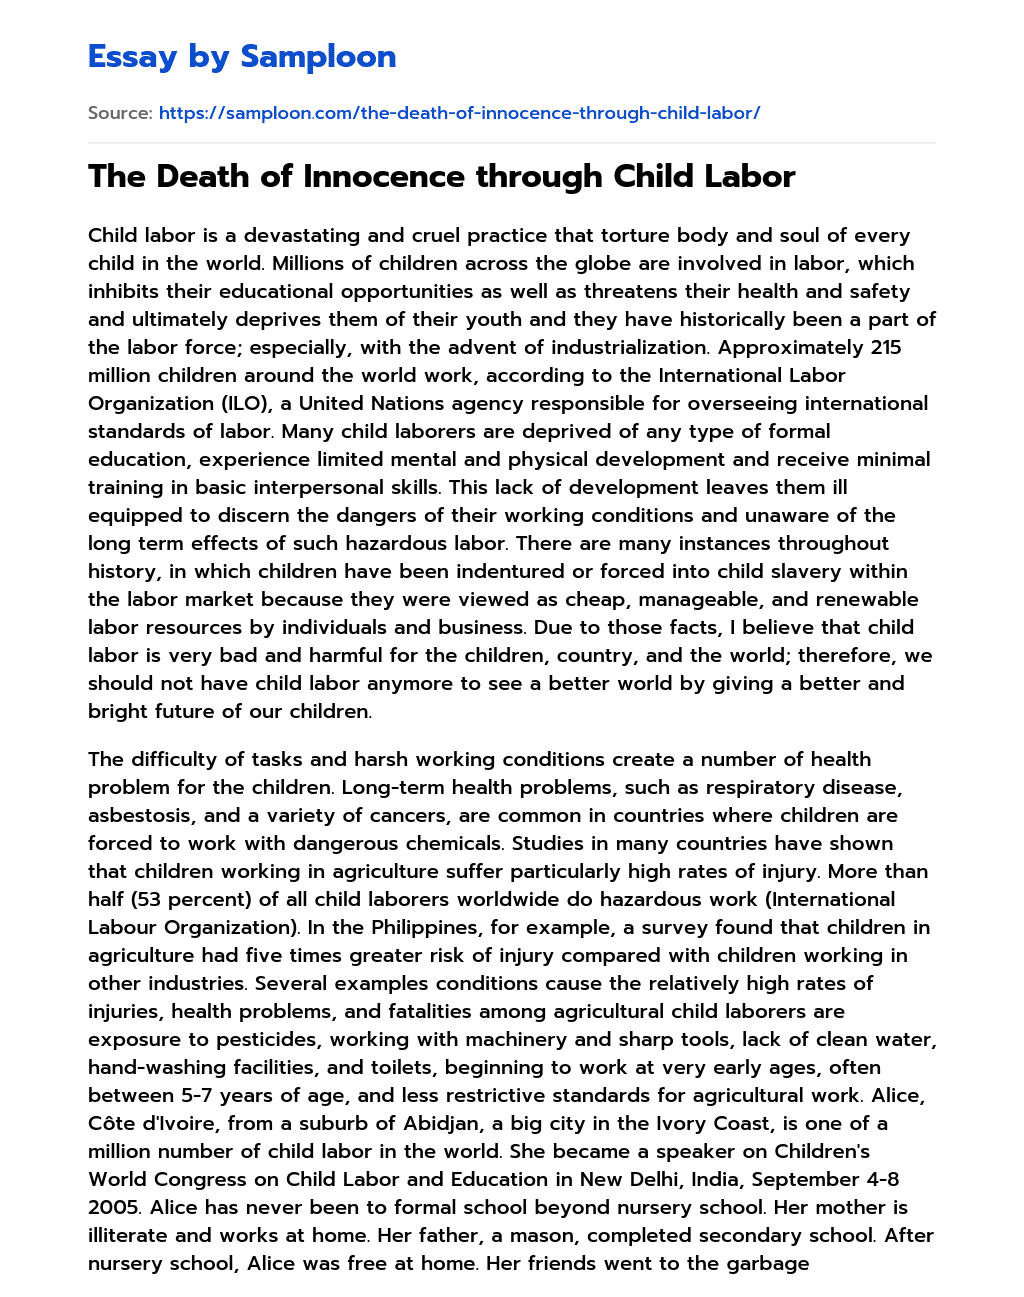 The Death of Innocence through Child Labor essay